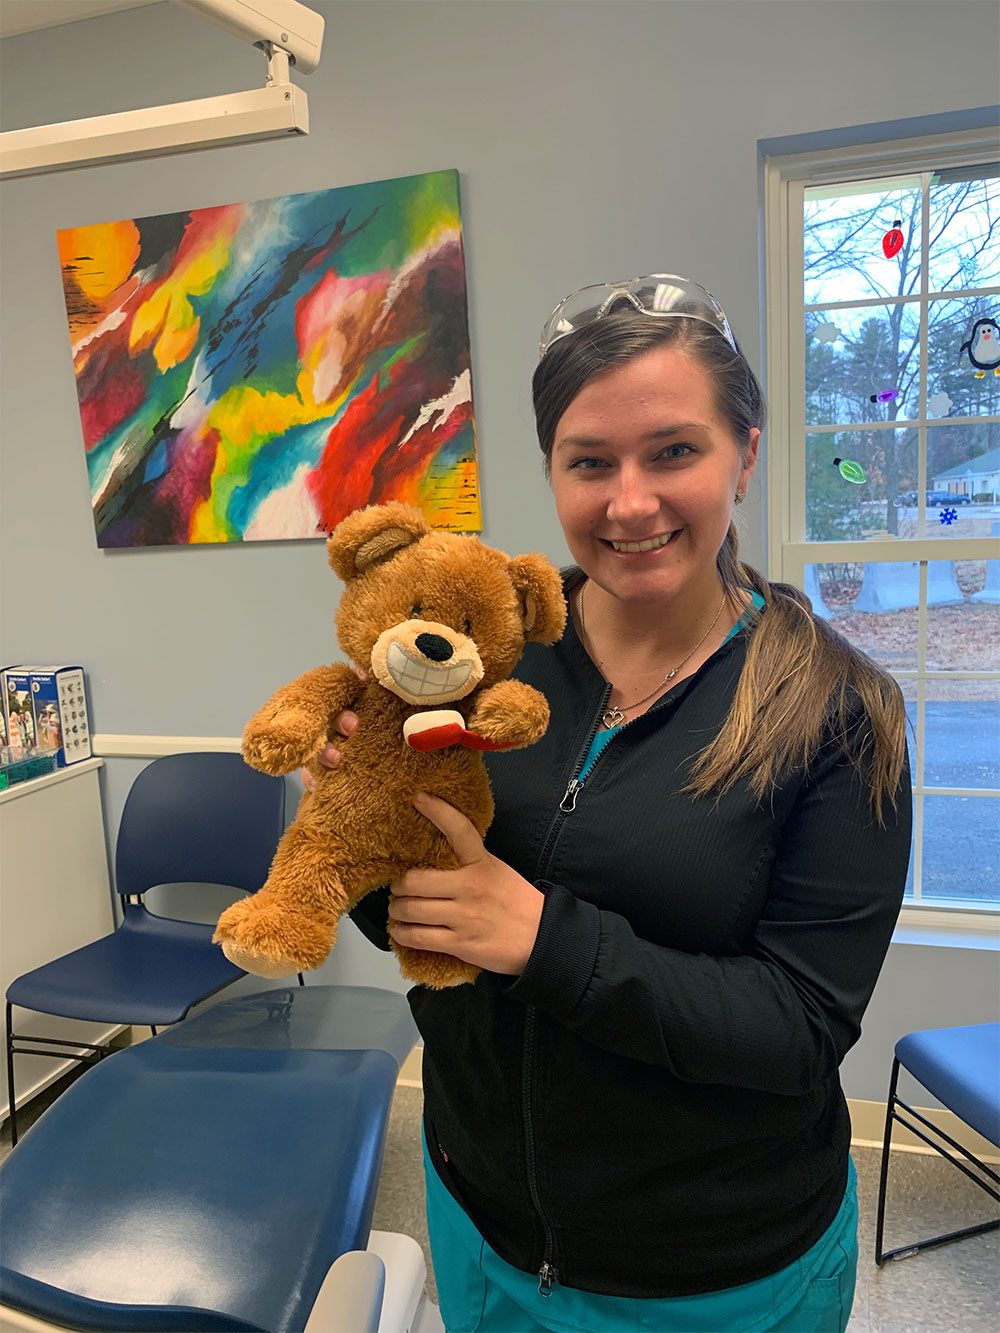 Dental Hygienist, Rachel poses with her favorite stuffed animal.